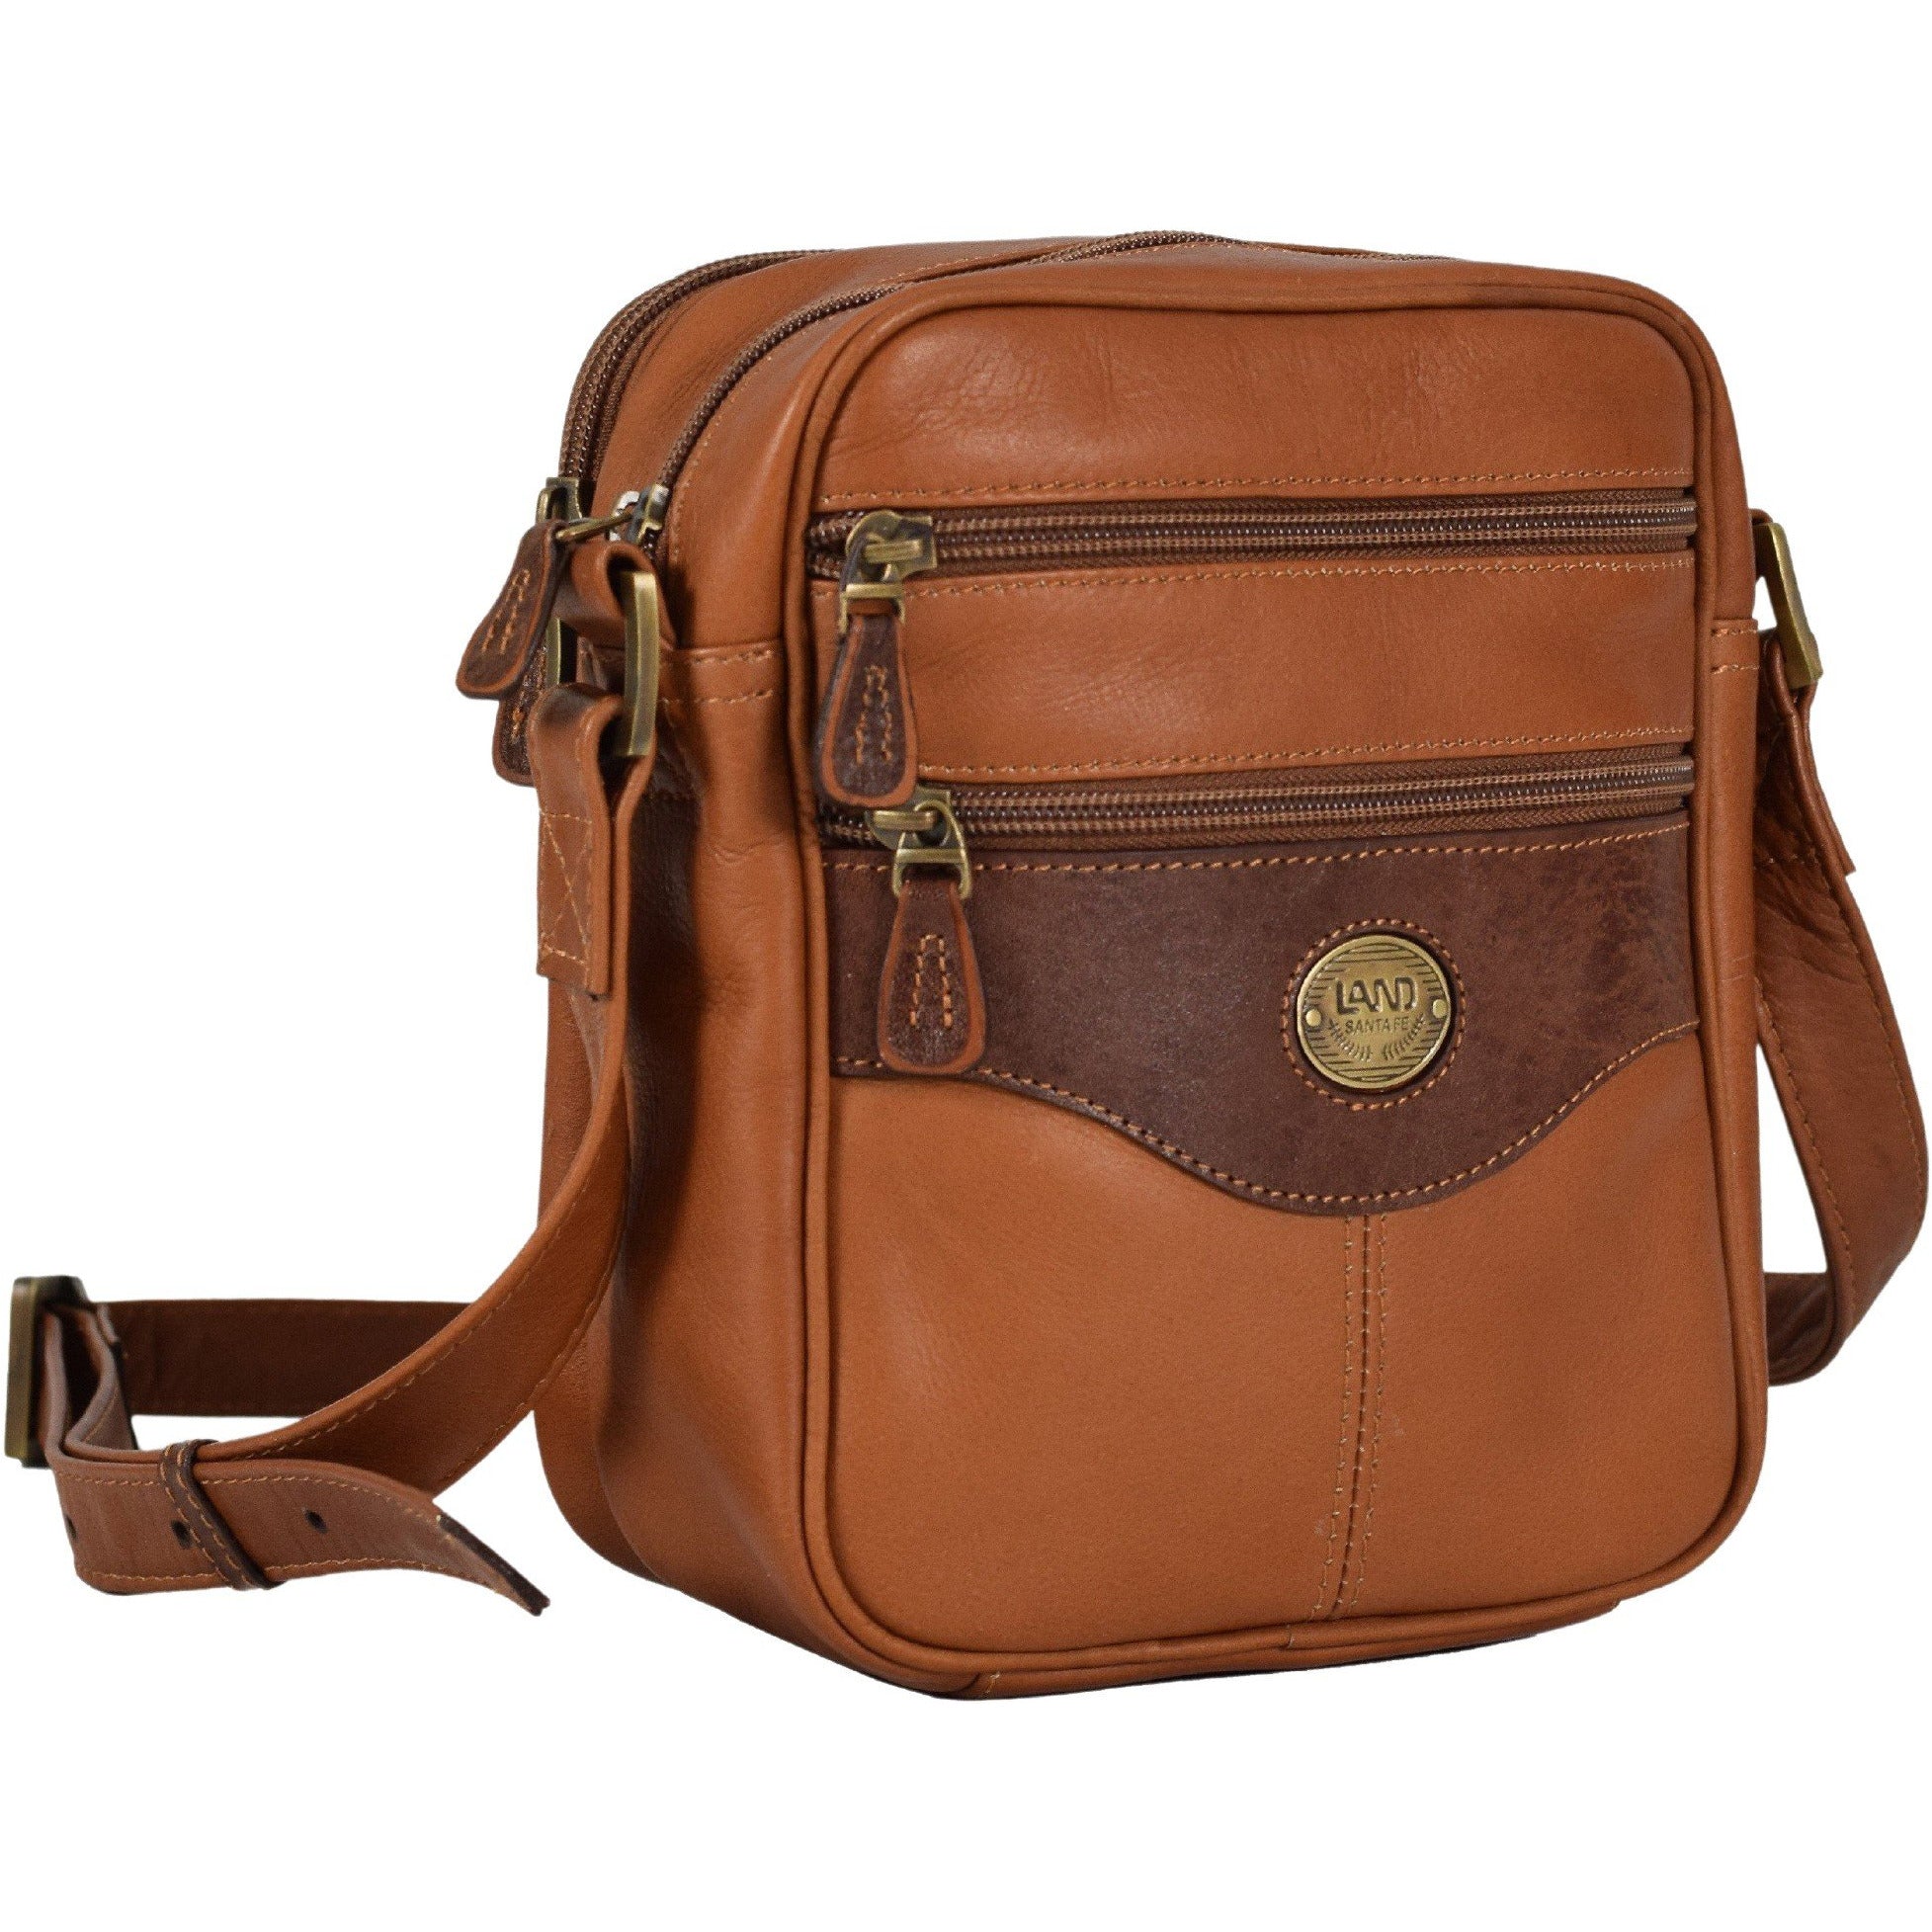 Santa Fe Crossover Bag - LAND Leather Goods